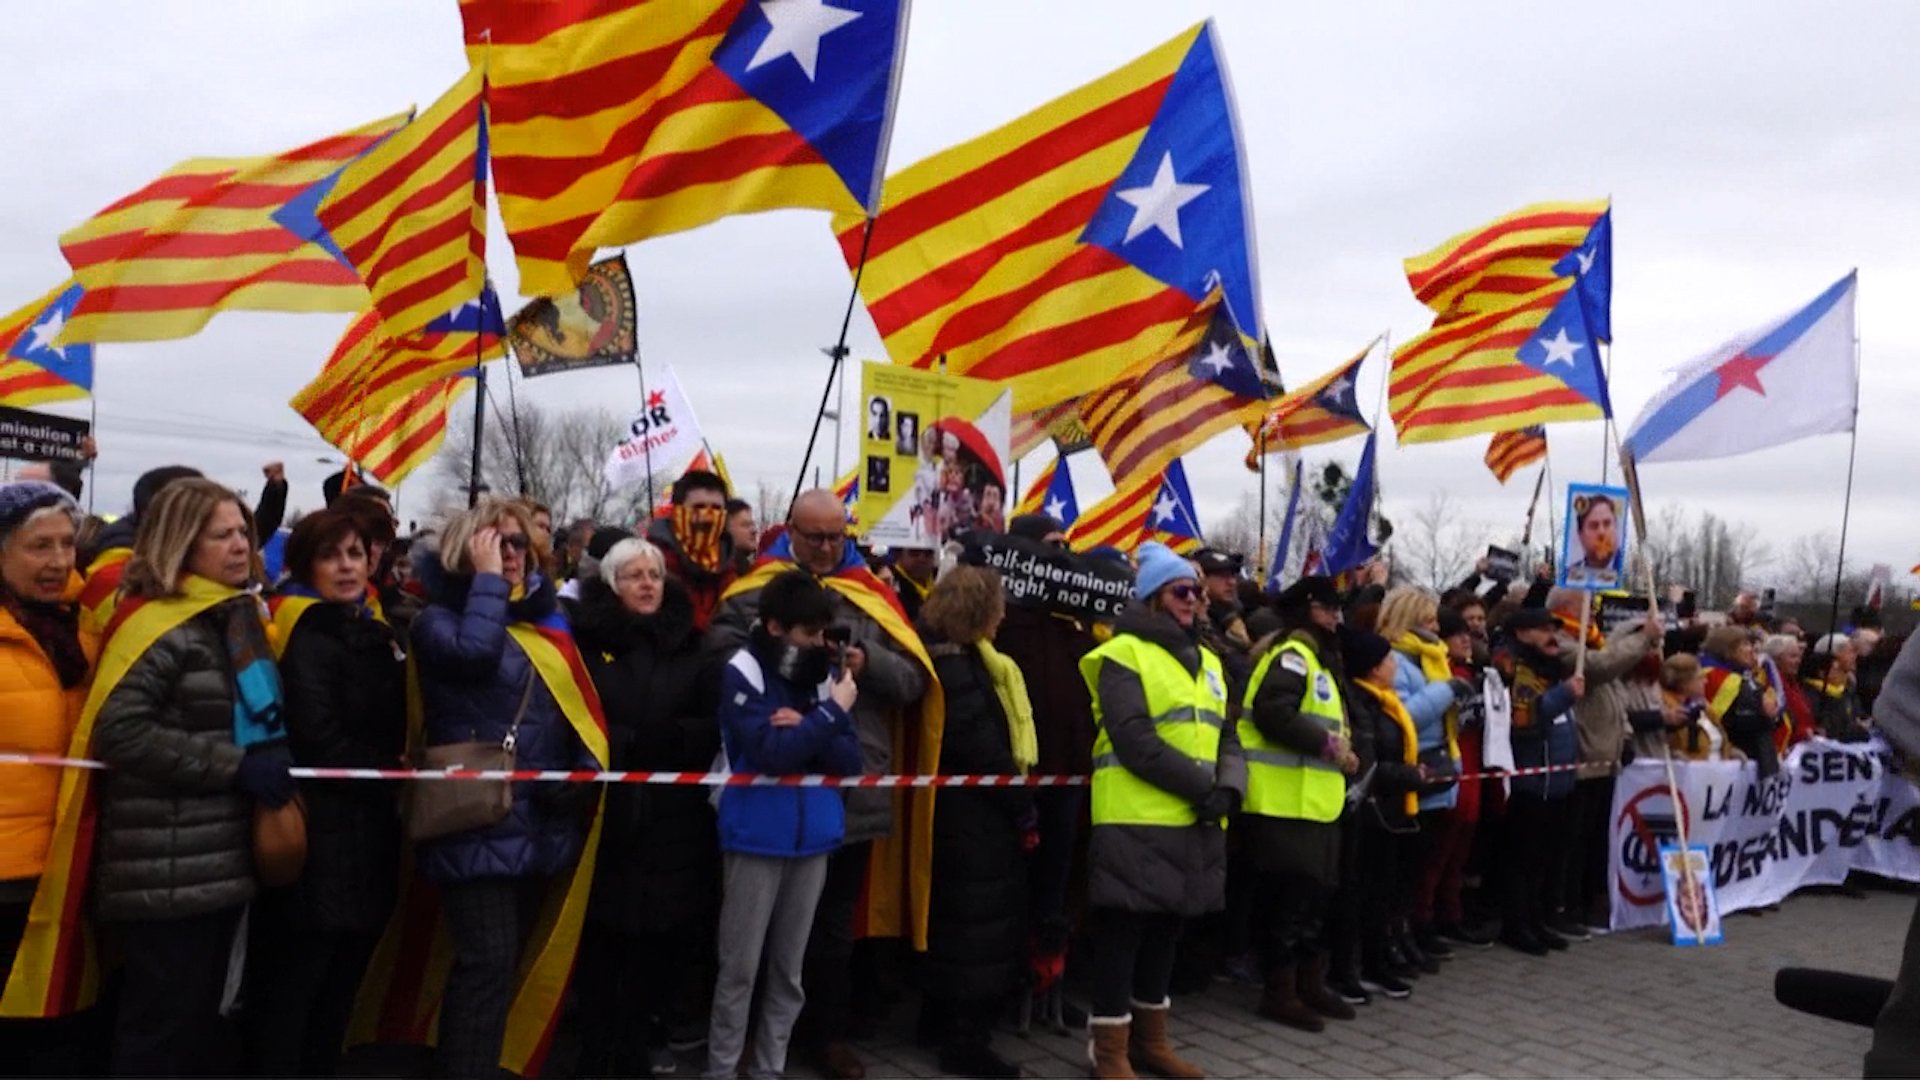 Video: Catalan anthem 'Els Segadors' outside the European Parliament